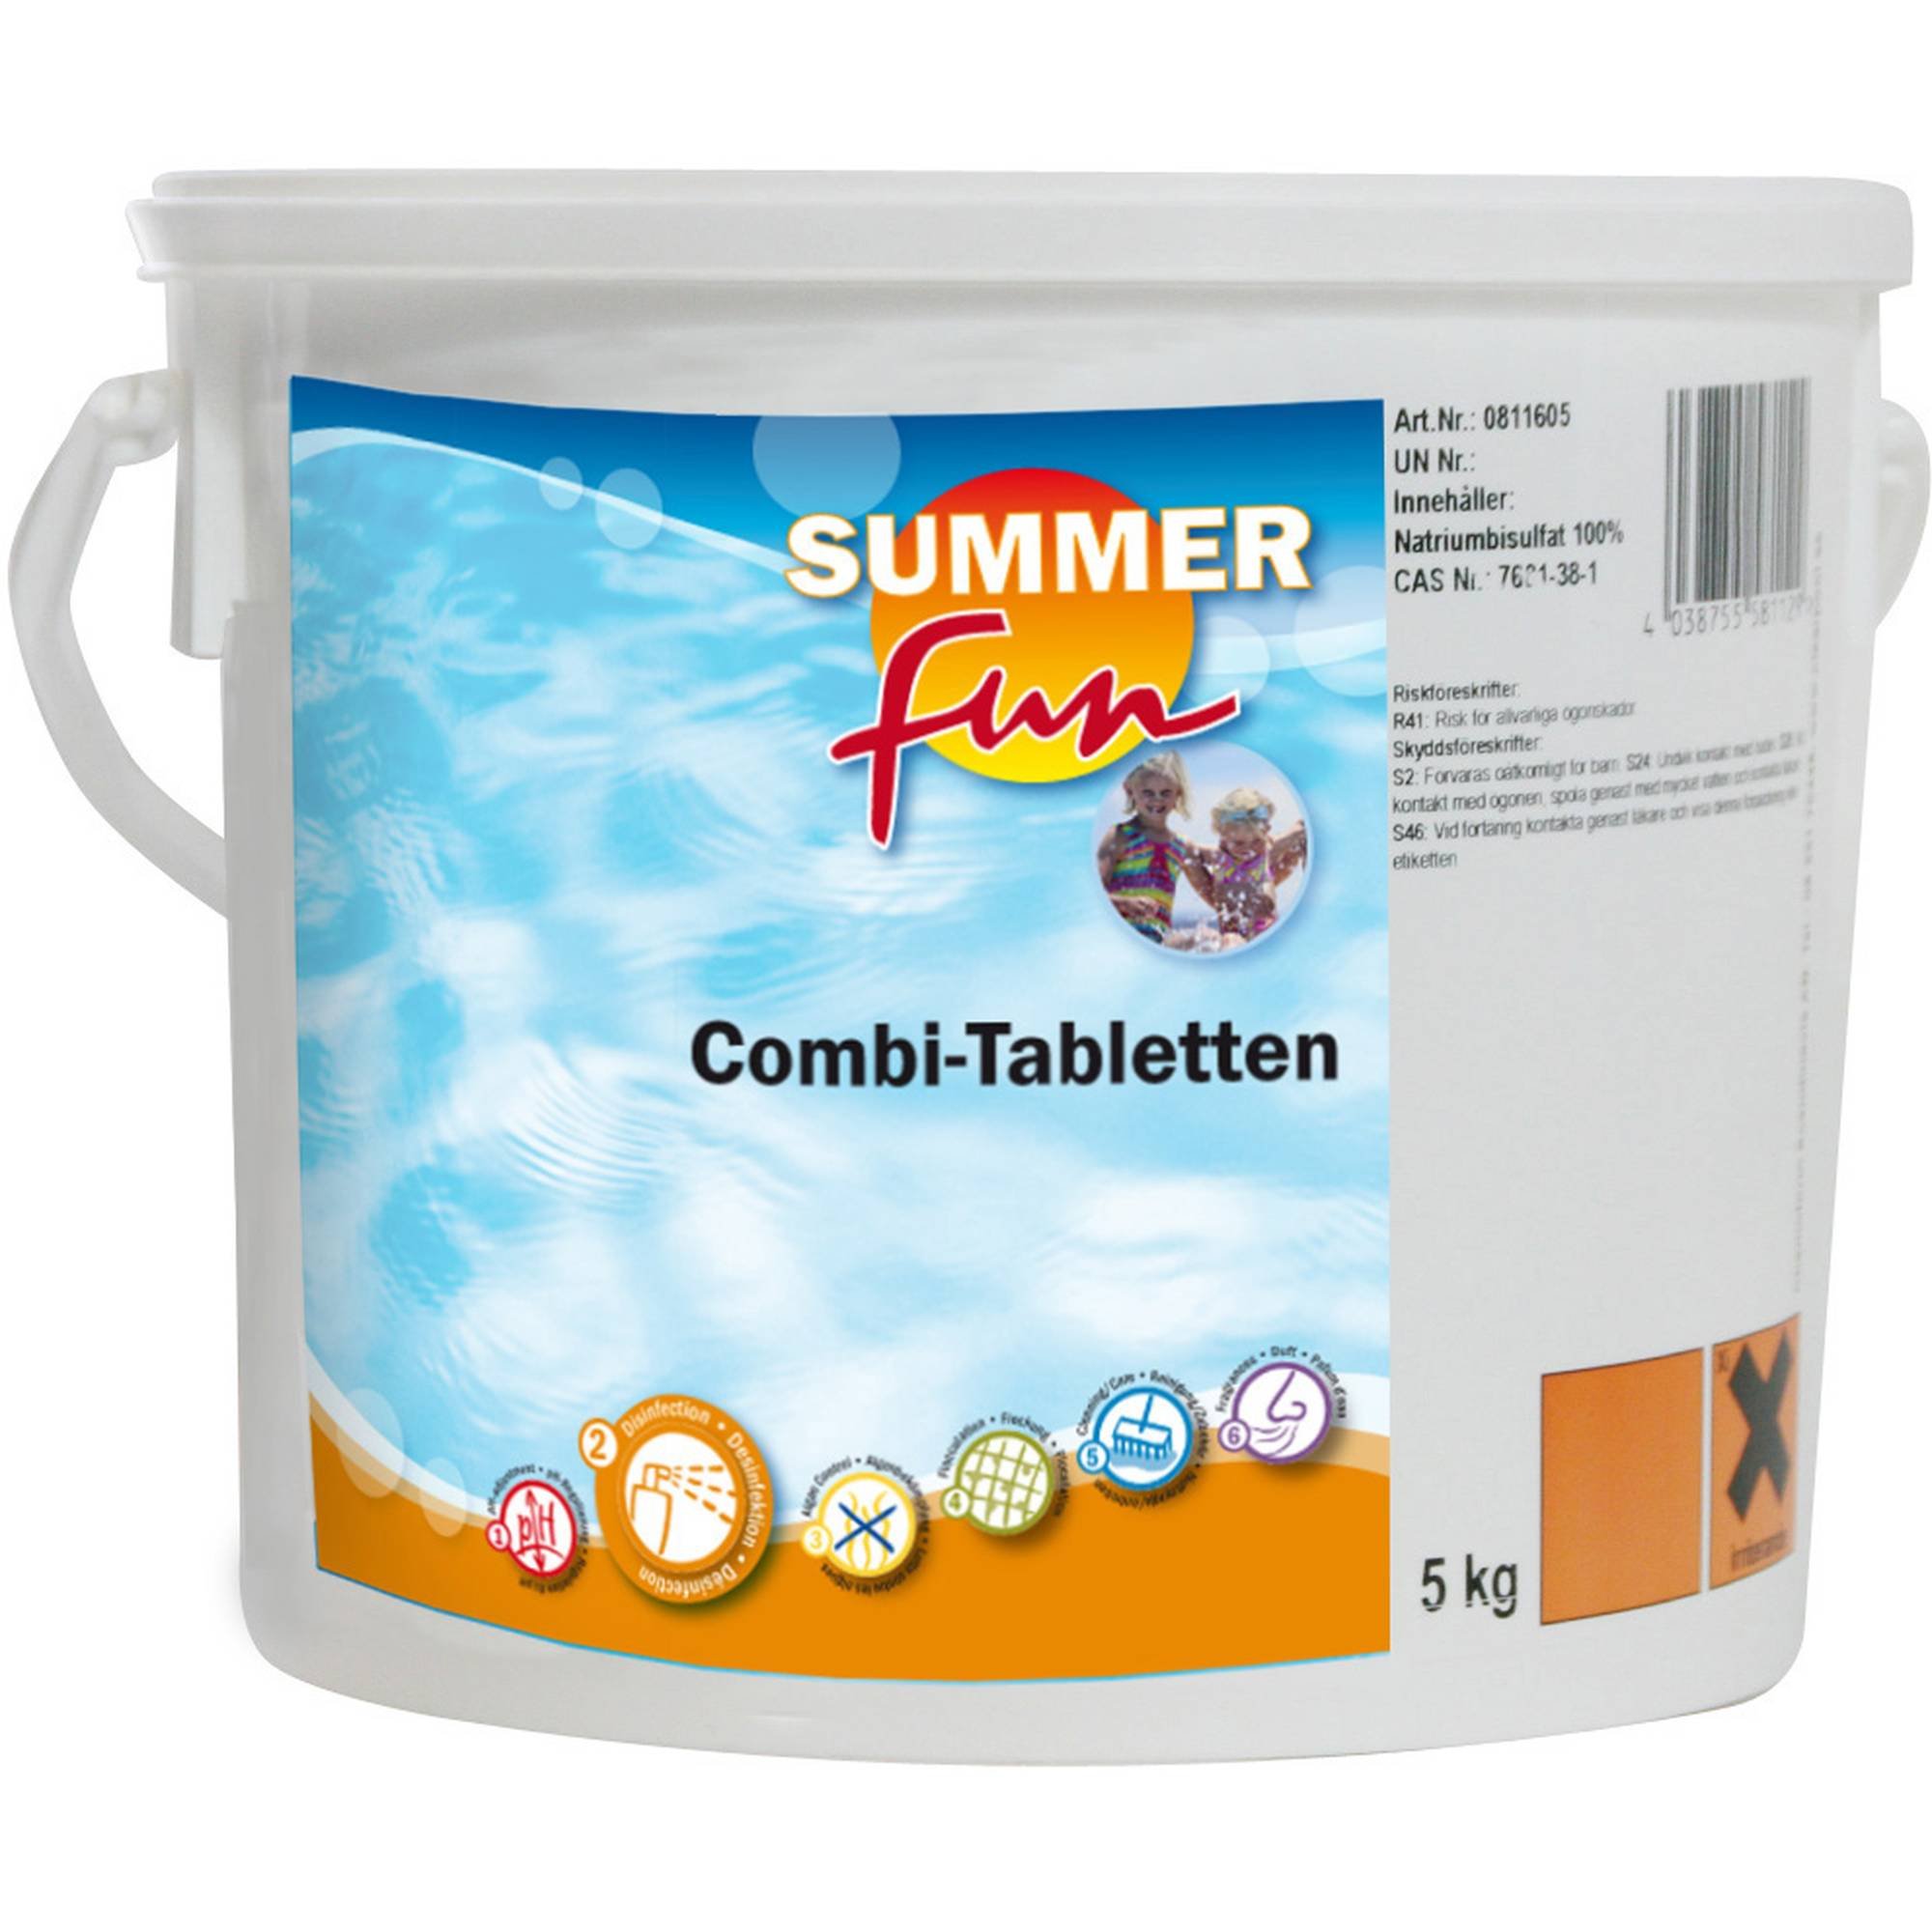 Summer Fun - Combi-Tabletten - 200g Tabletten, 5 kg